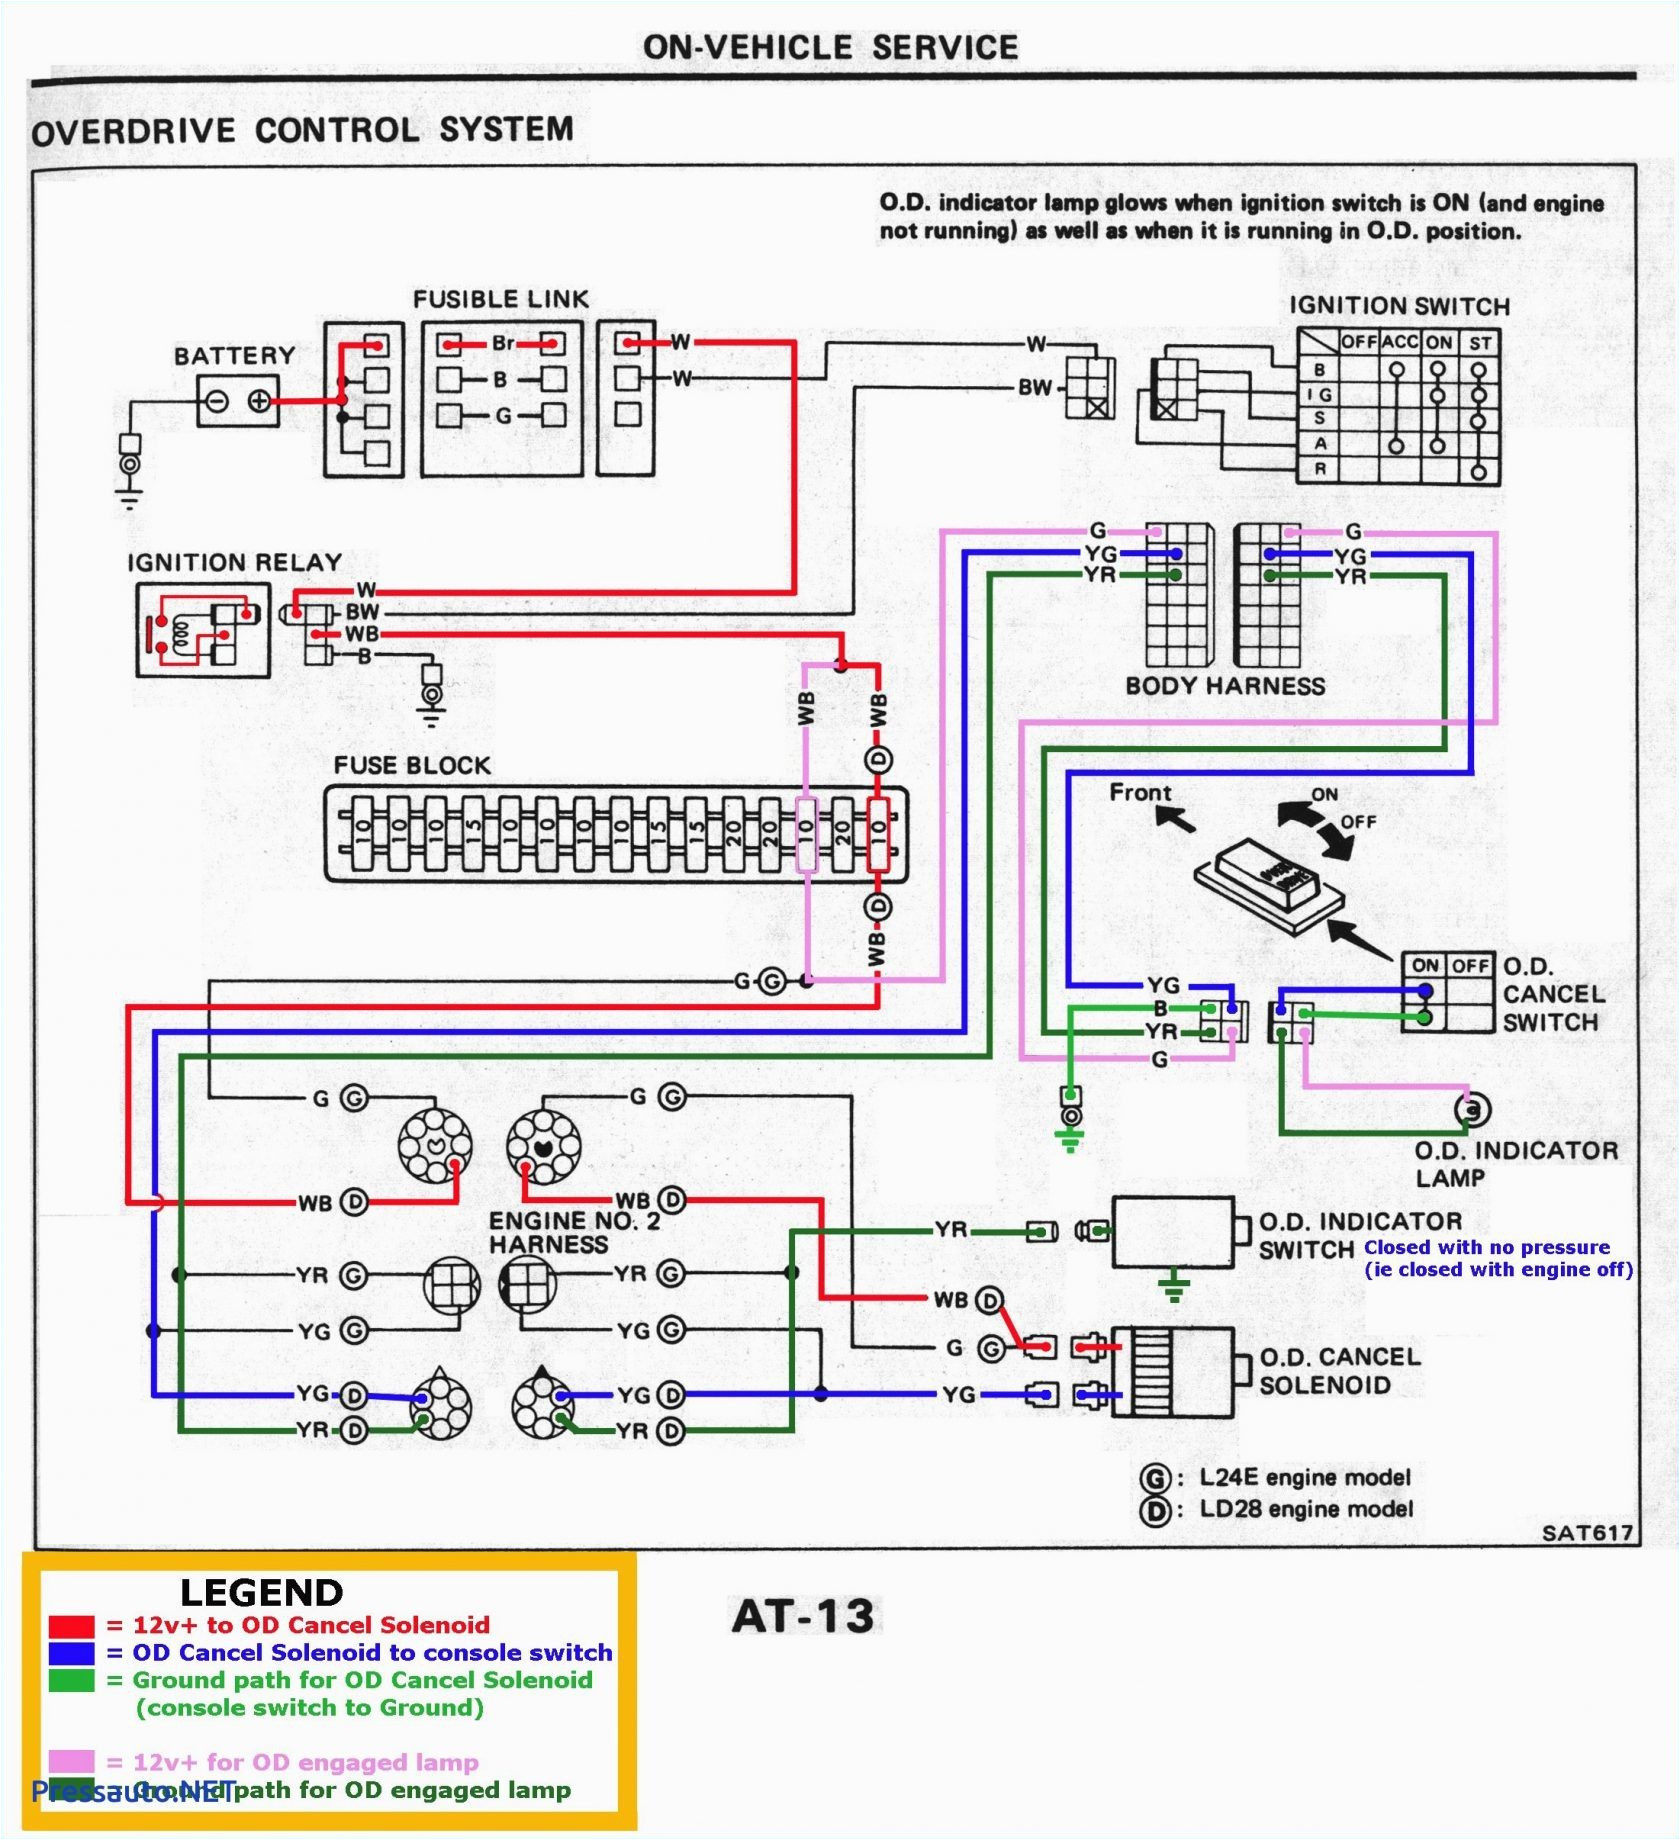 2001 Honda Civic Radio Wiring Diagram Pdf 98 Honda Civic Wiring Diagram Wiring Diagrams Recent